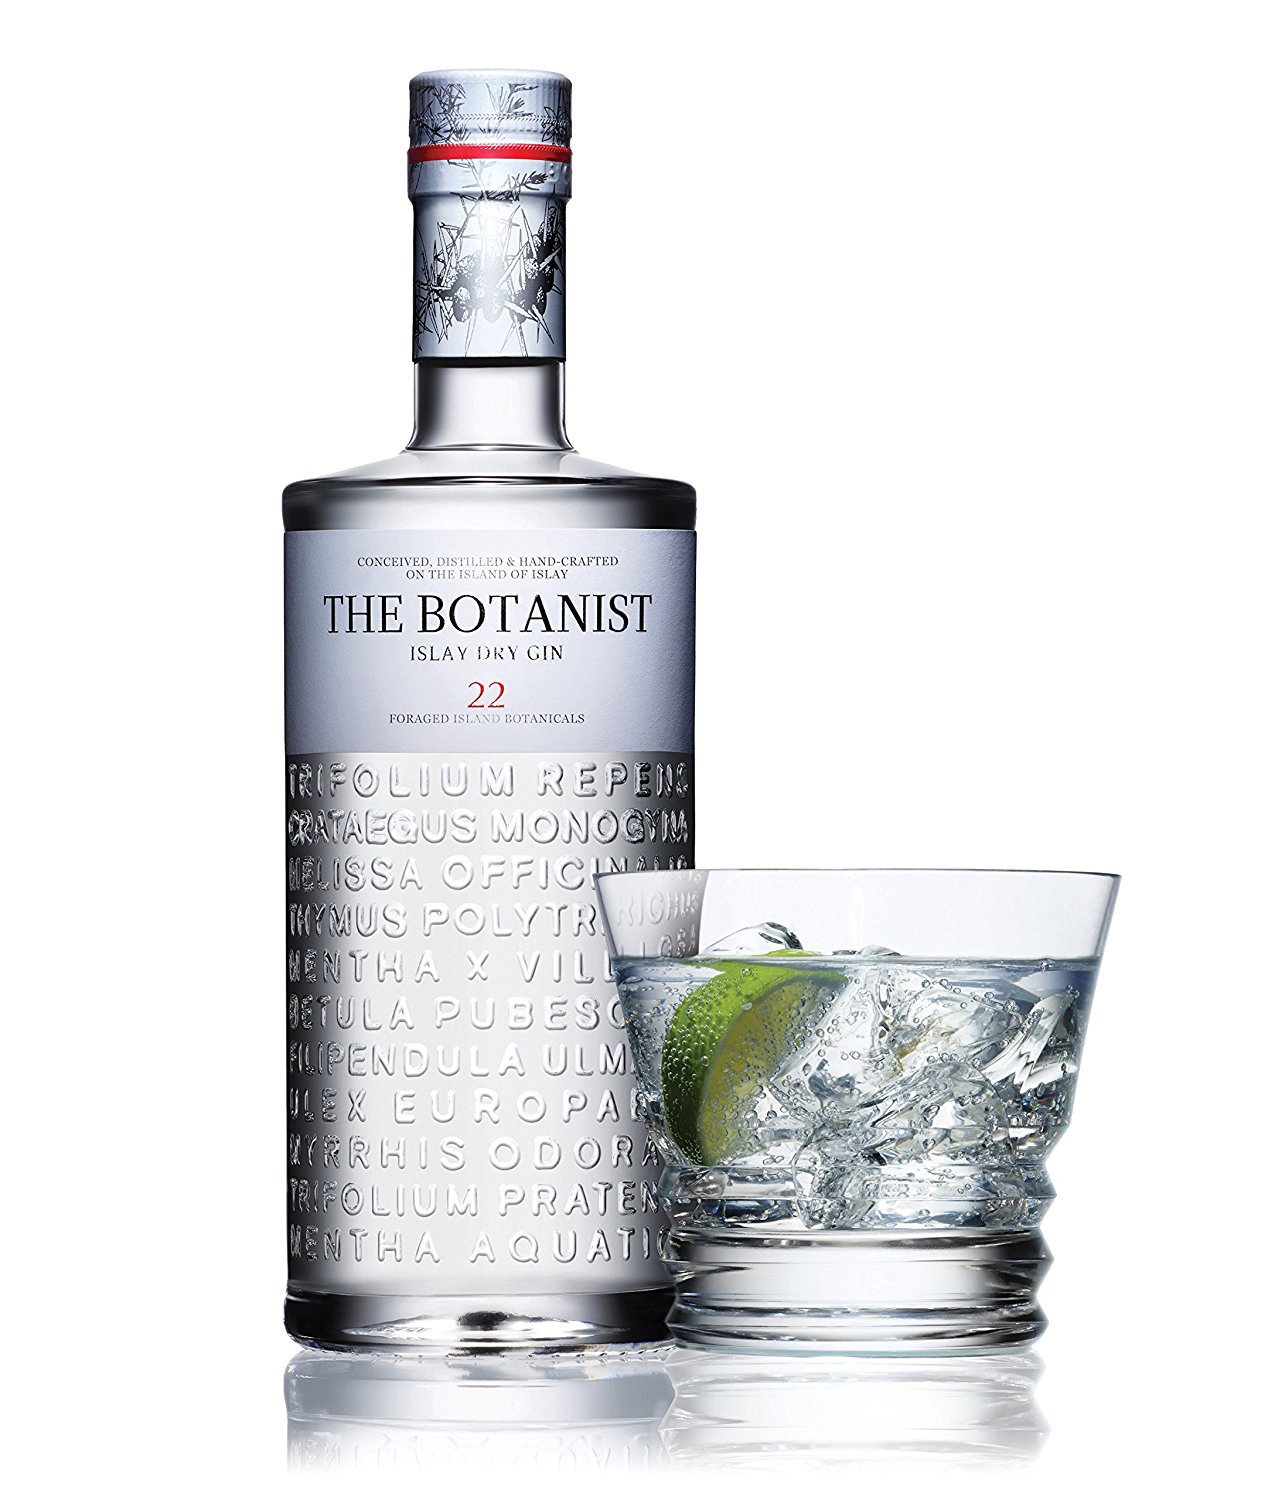 The-Botanist gin